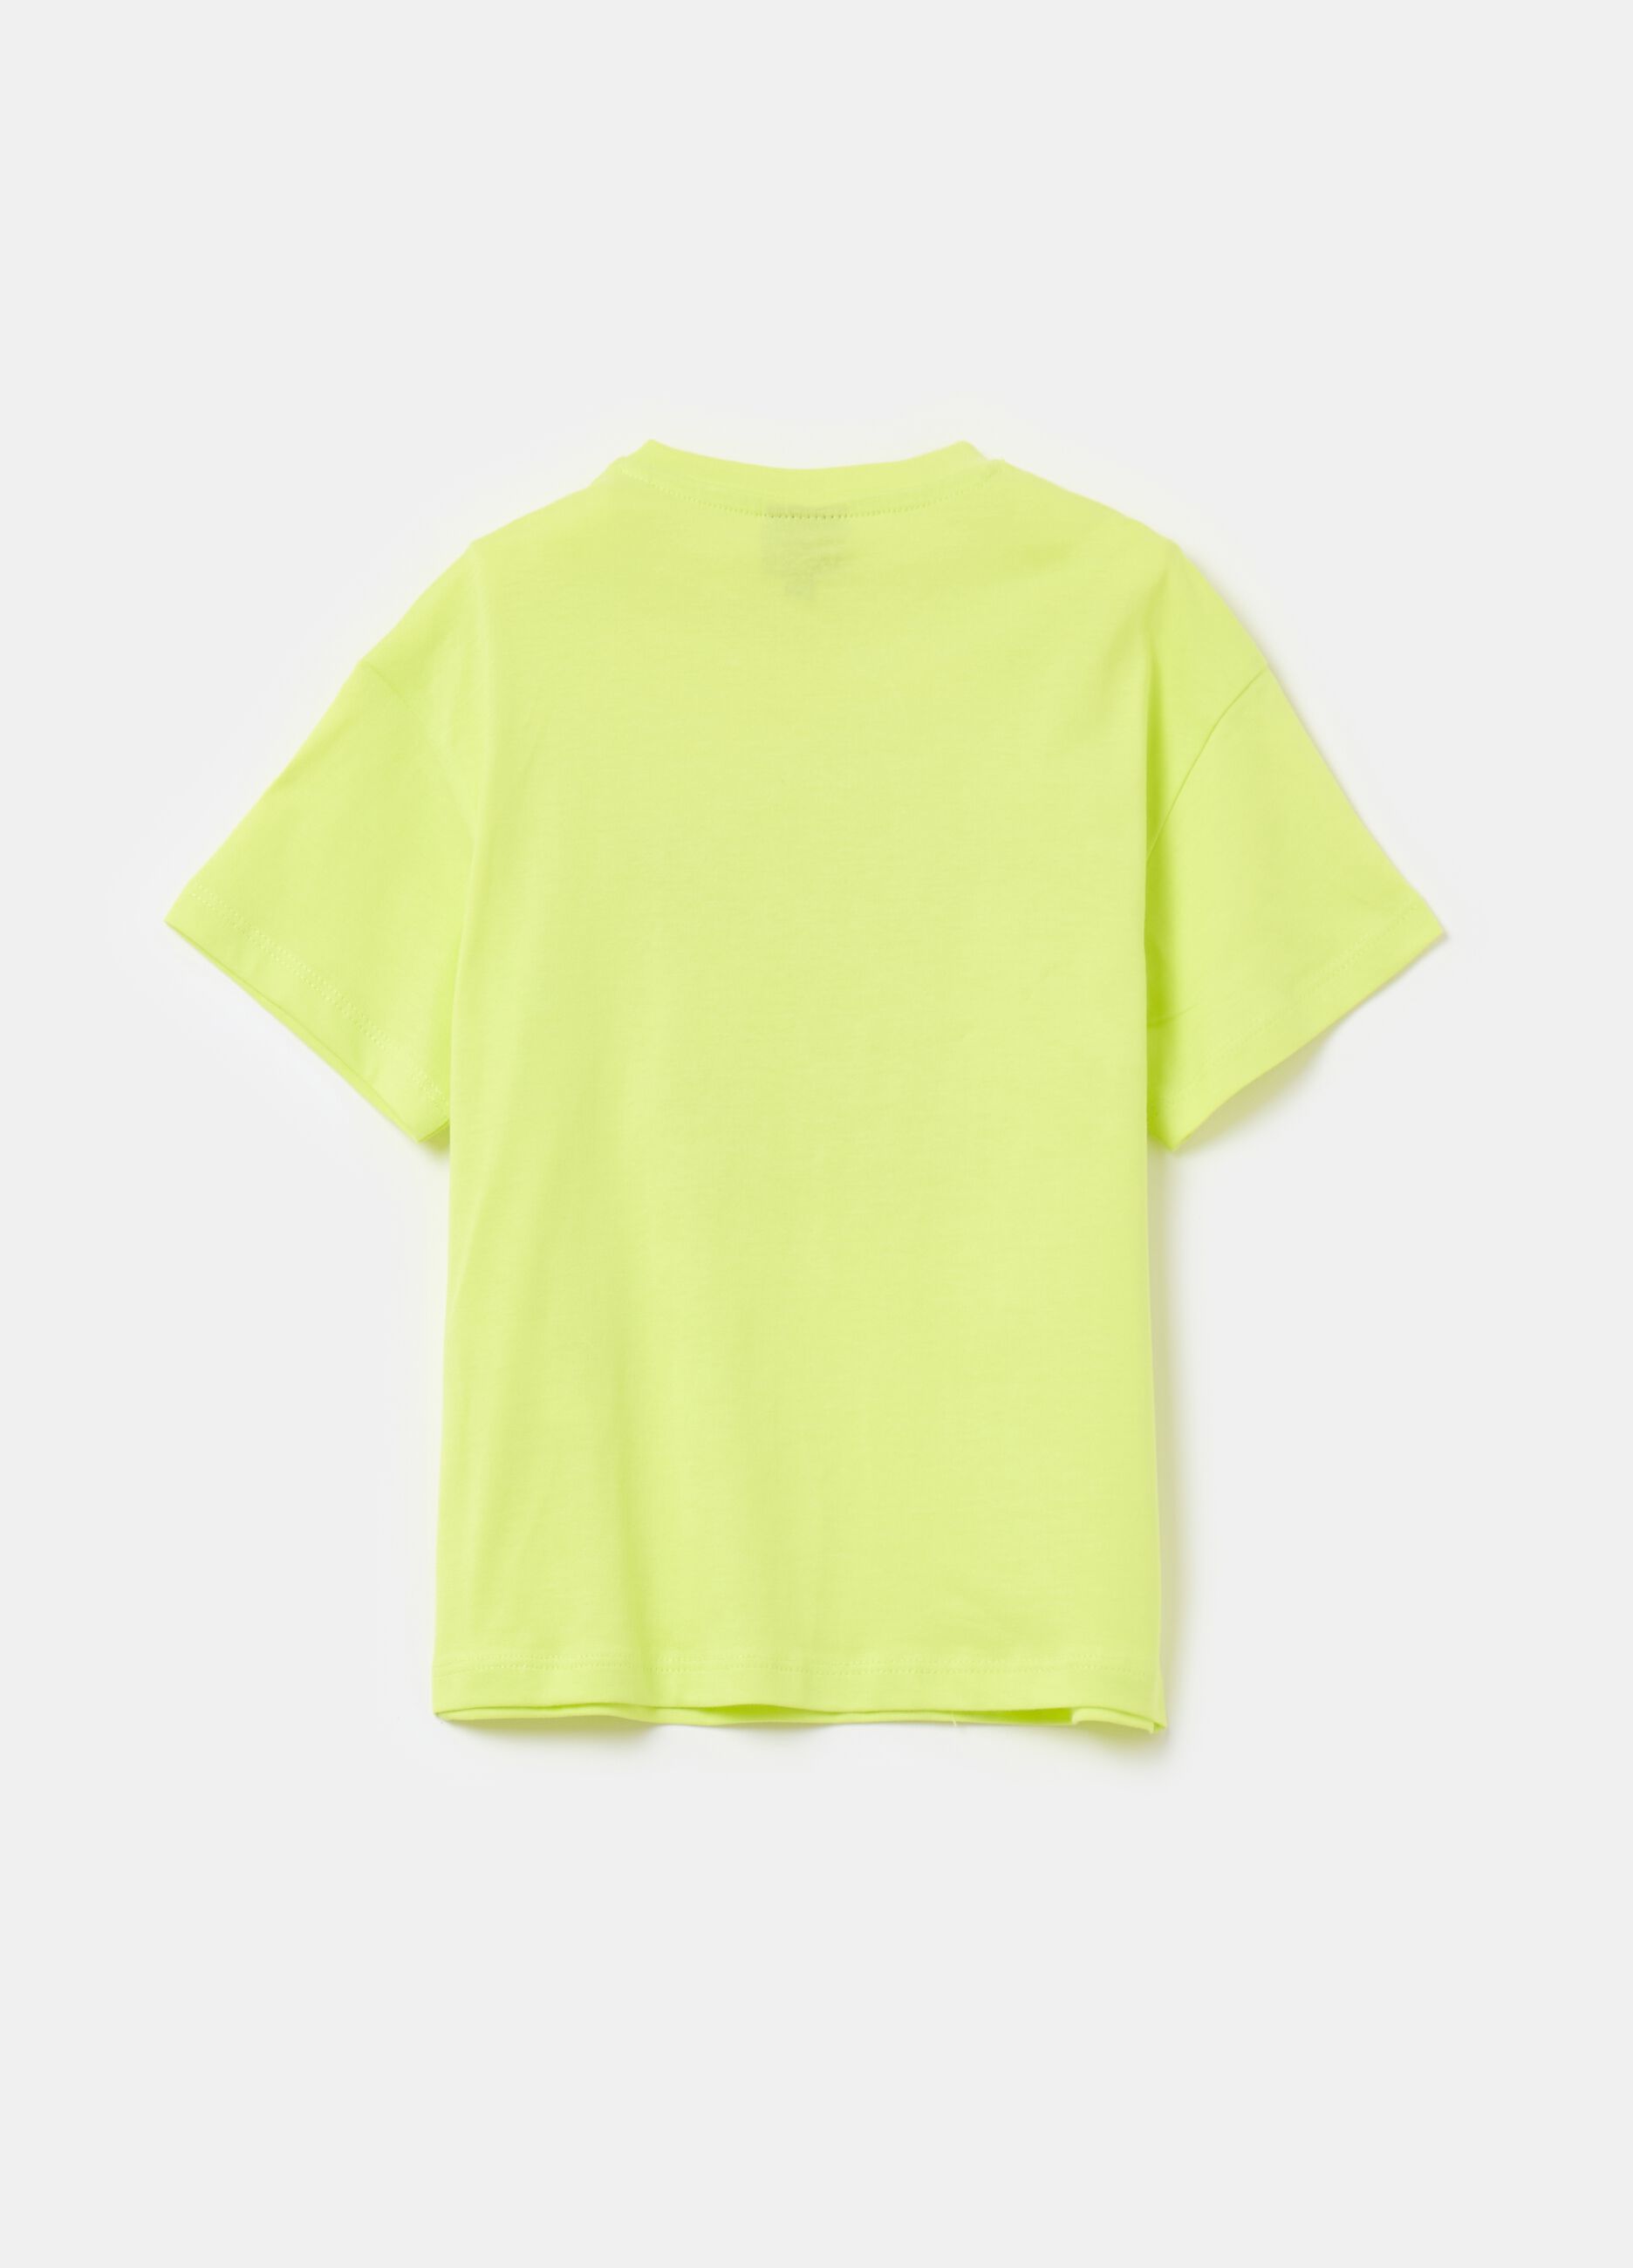 Cotton T-shirt with Yoda print